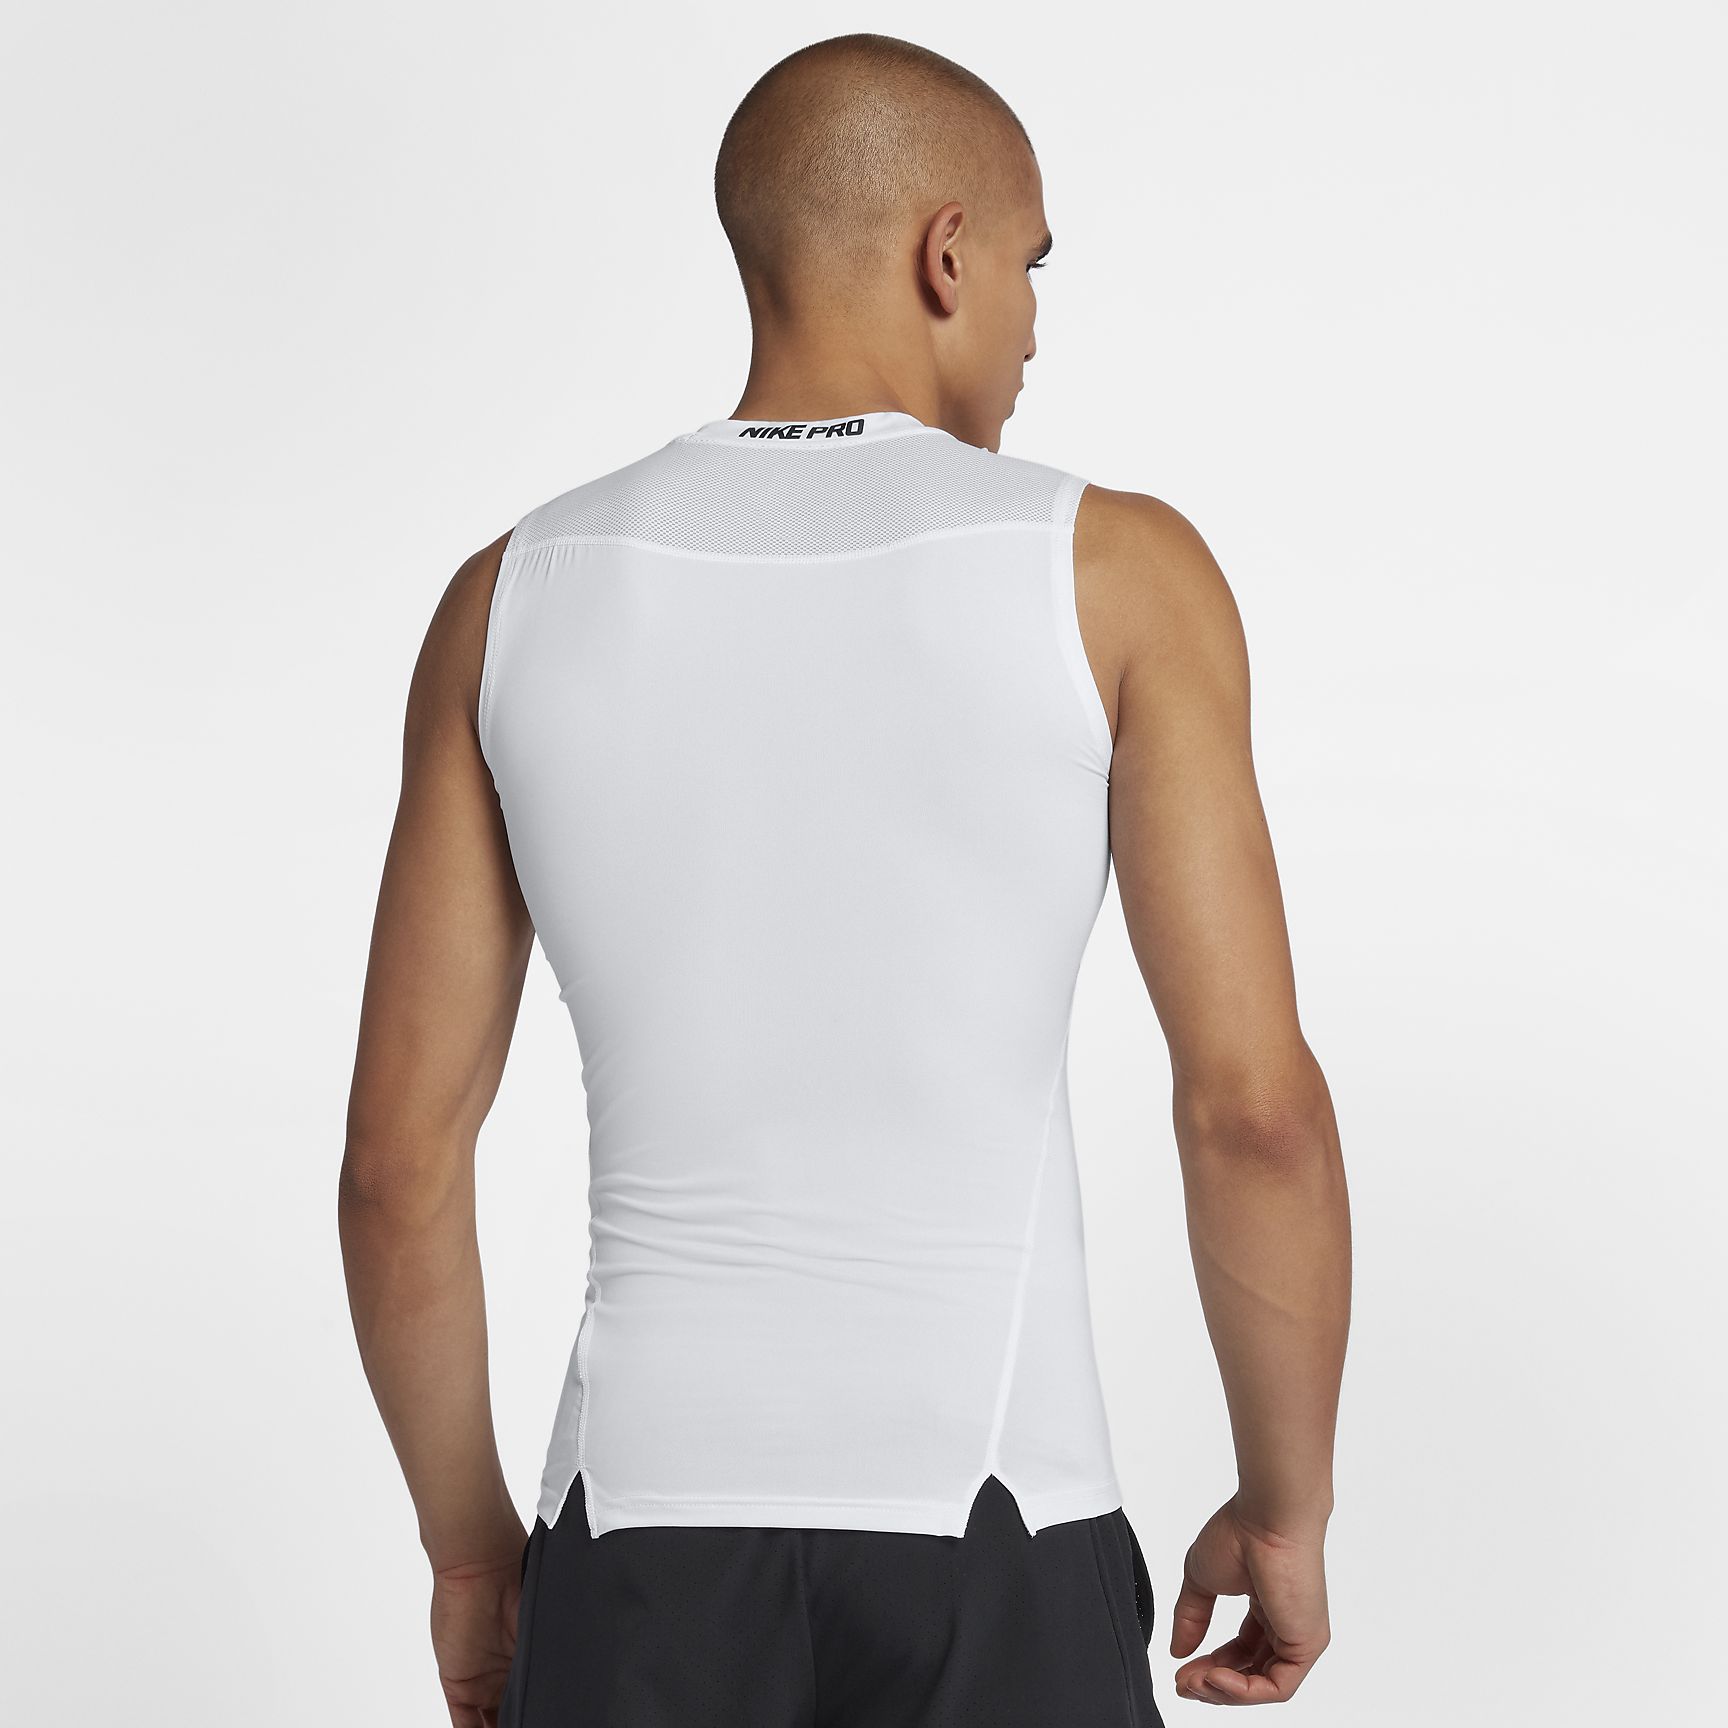 Nike Pro Sleeveless Training Tank Top - Clothes Shirts - Sporting goods ...